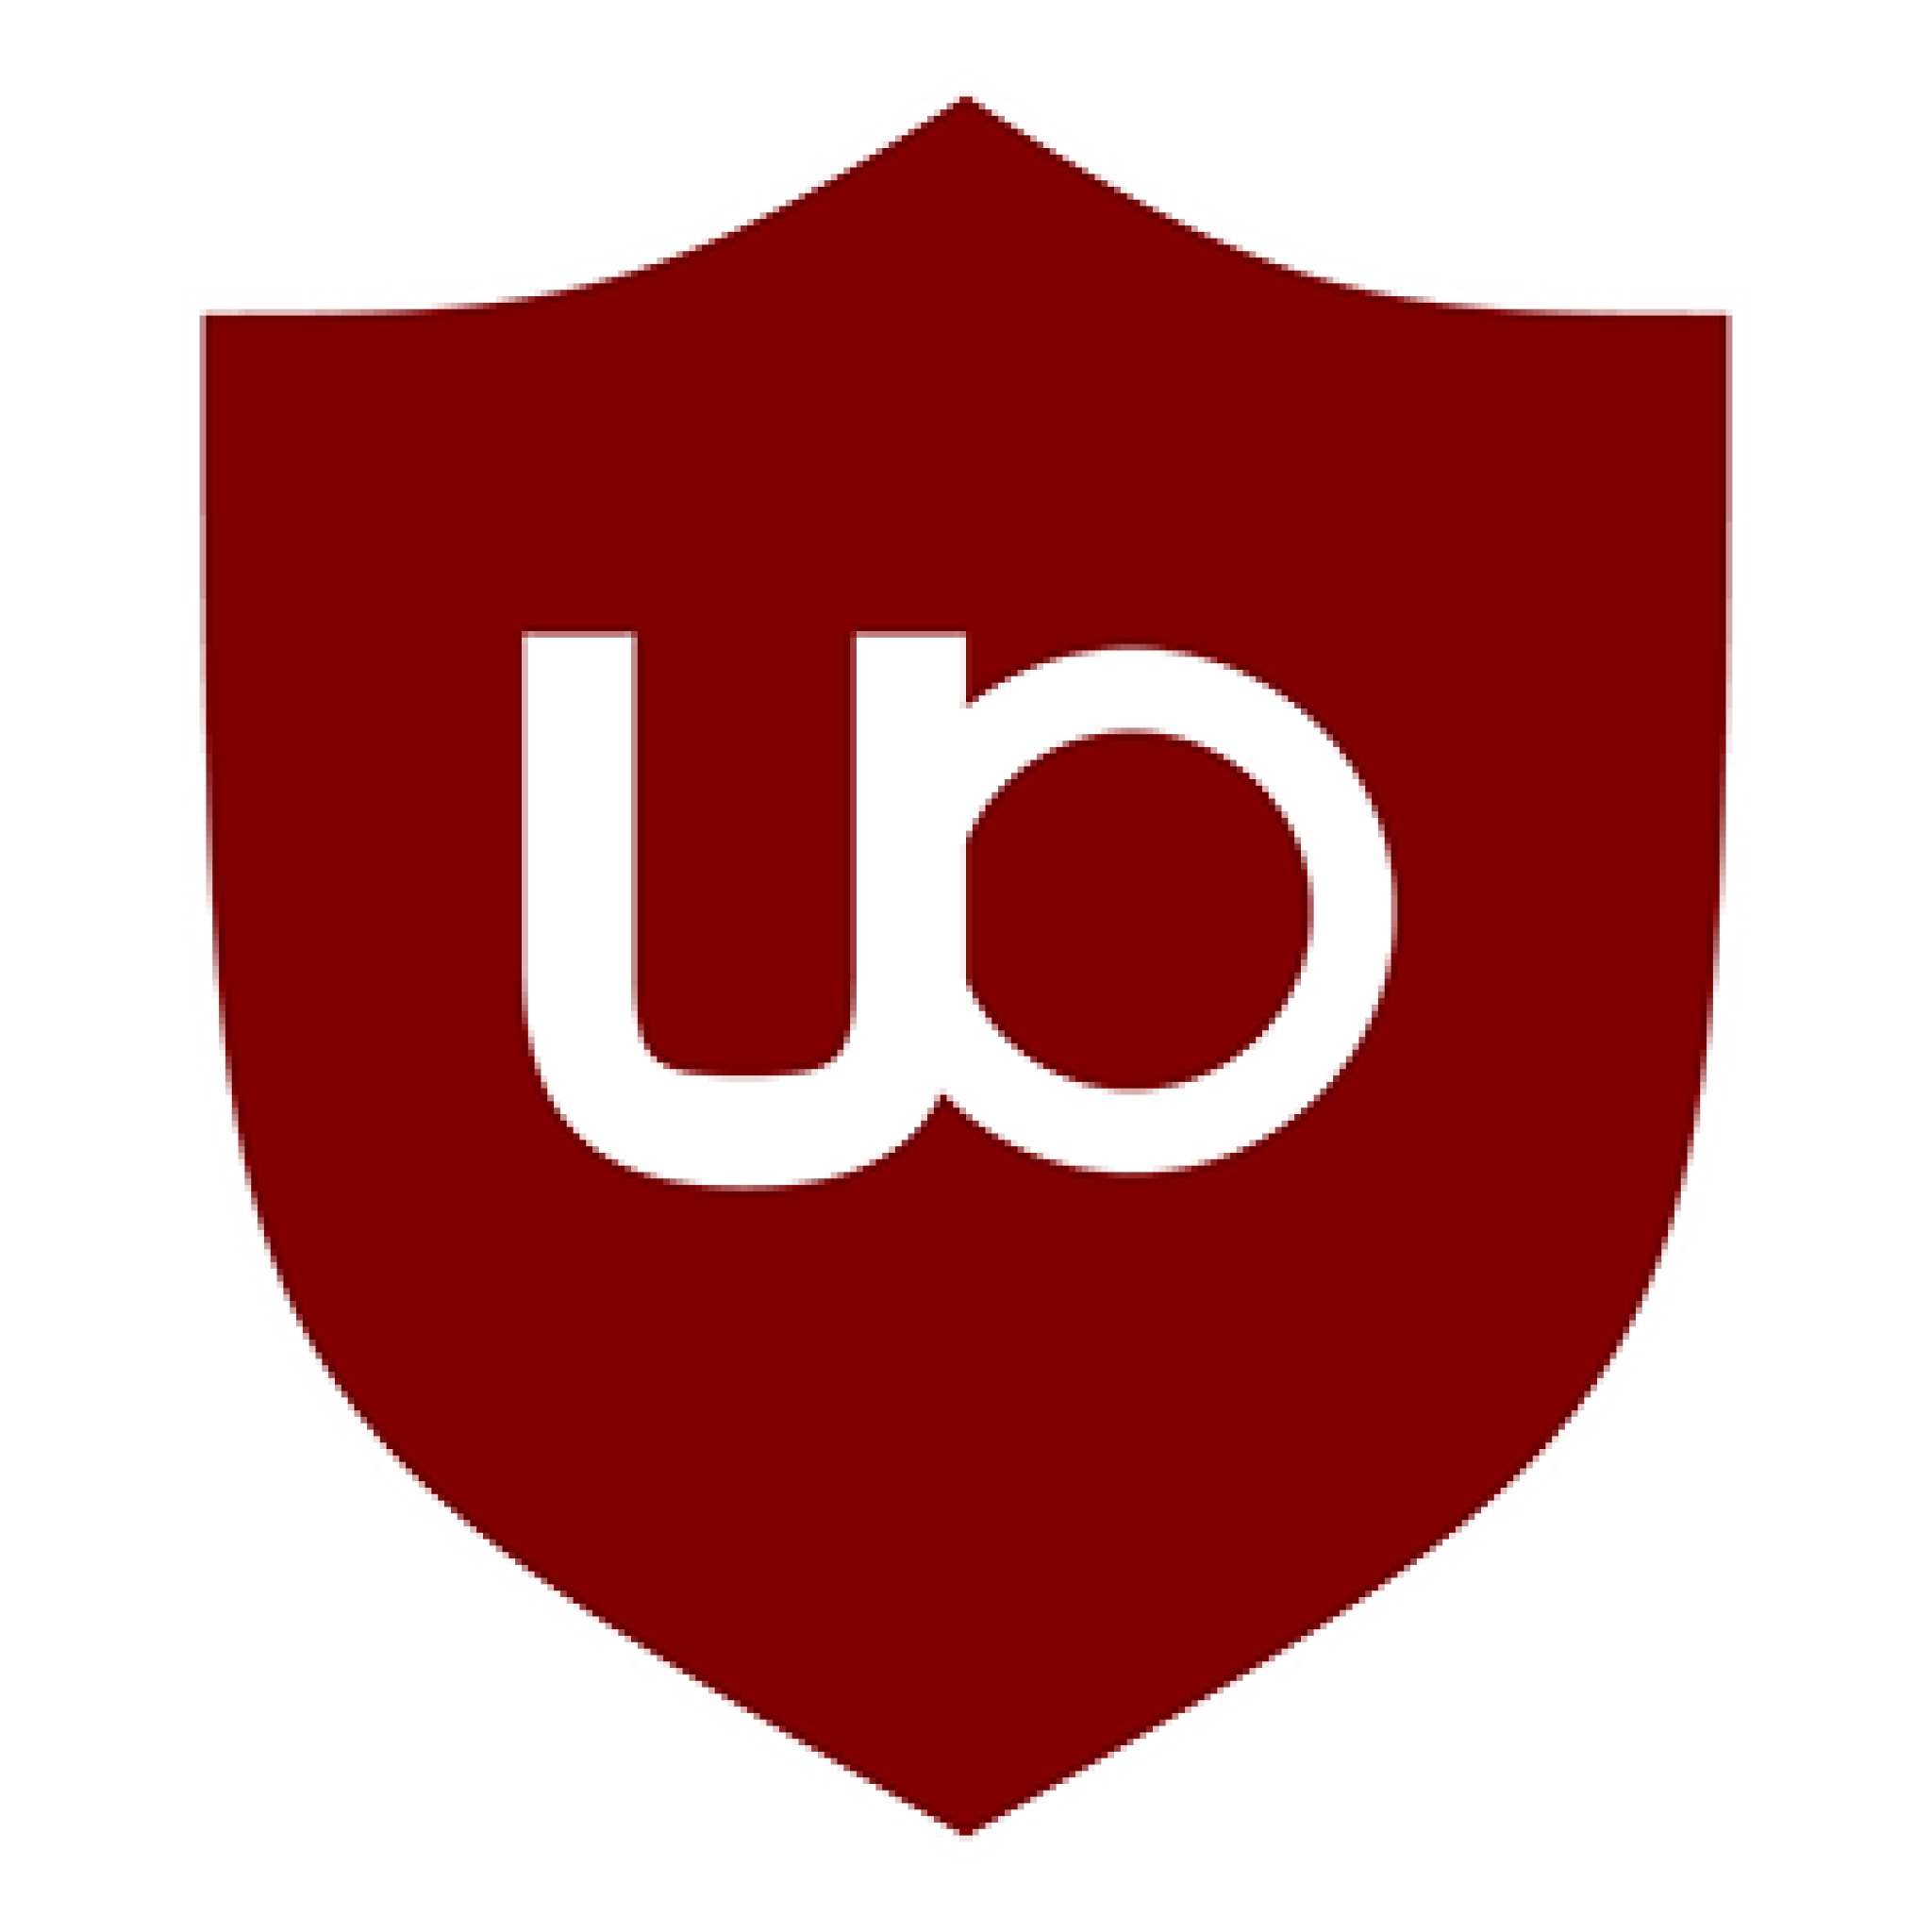 ublock orgin download